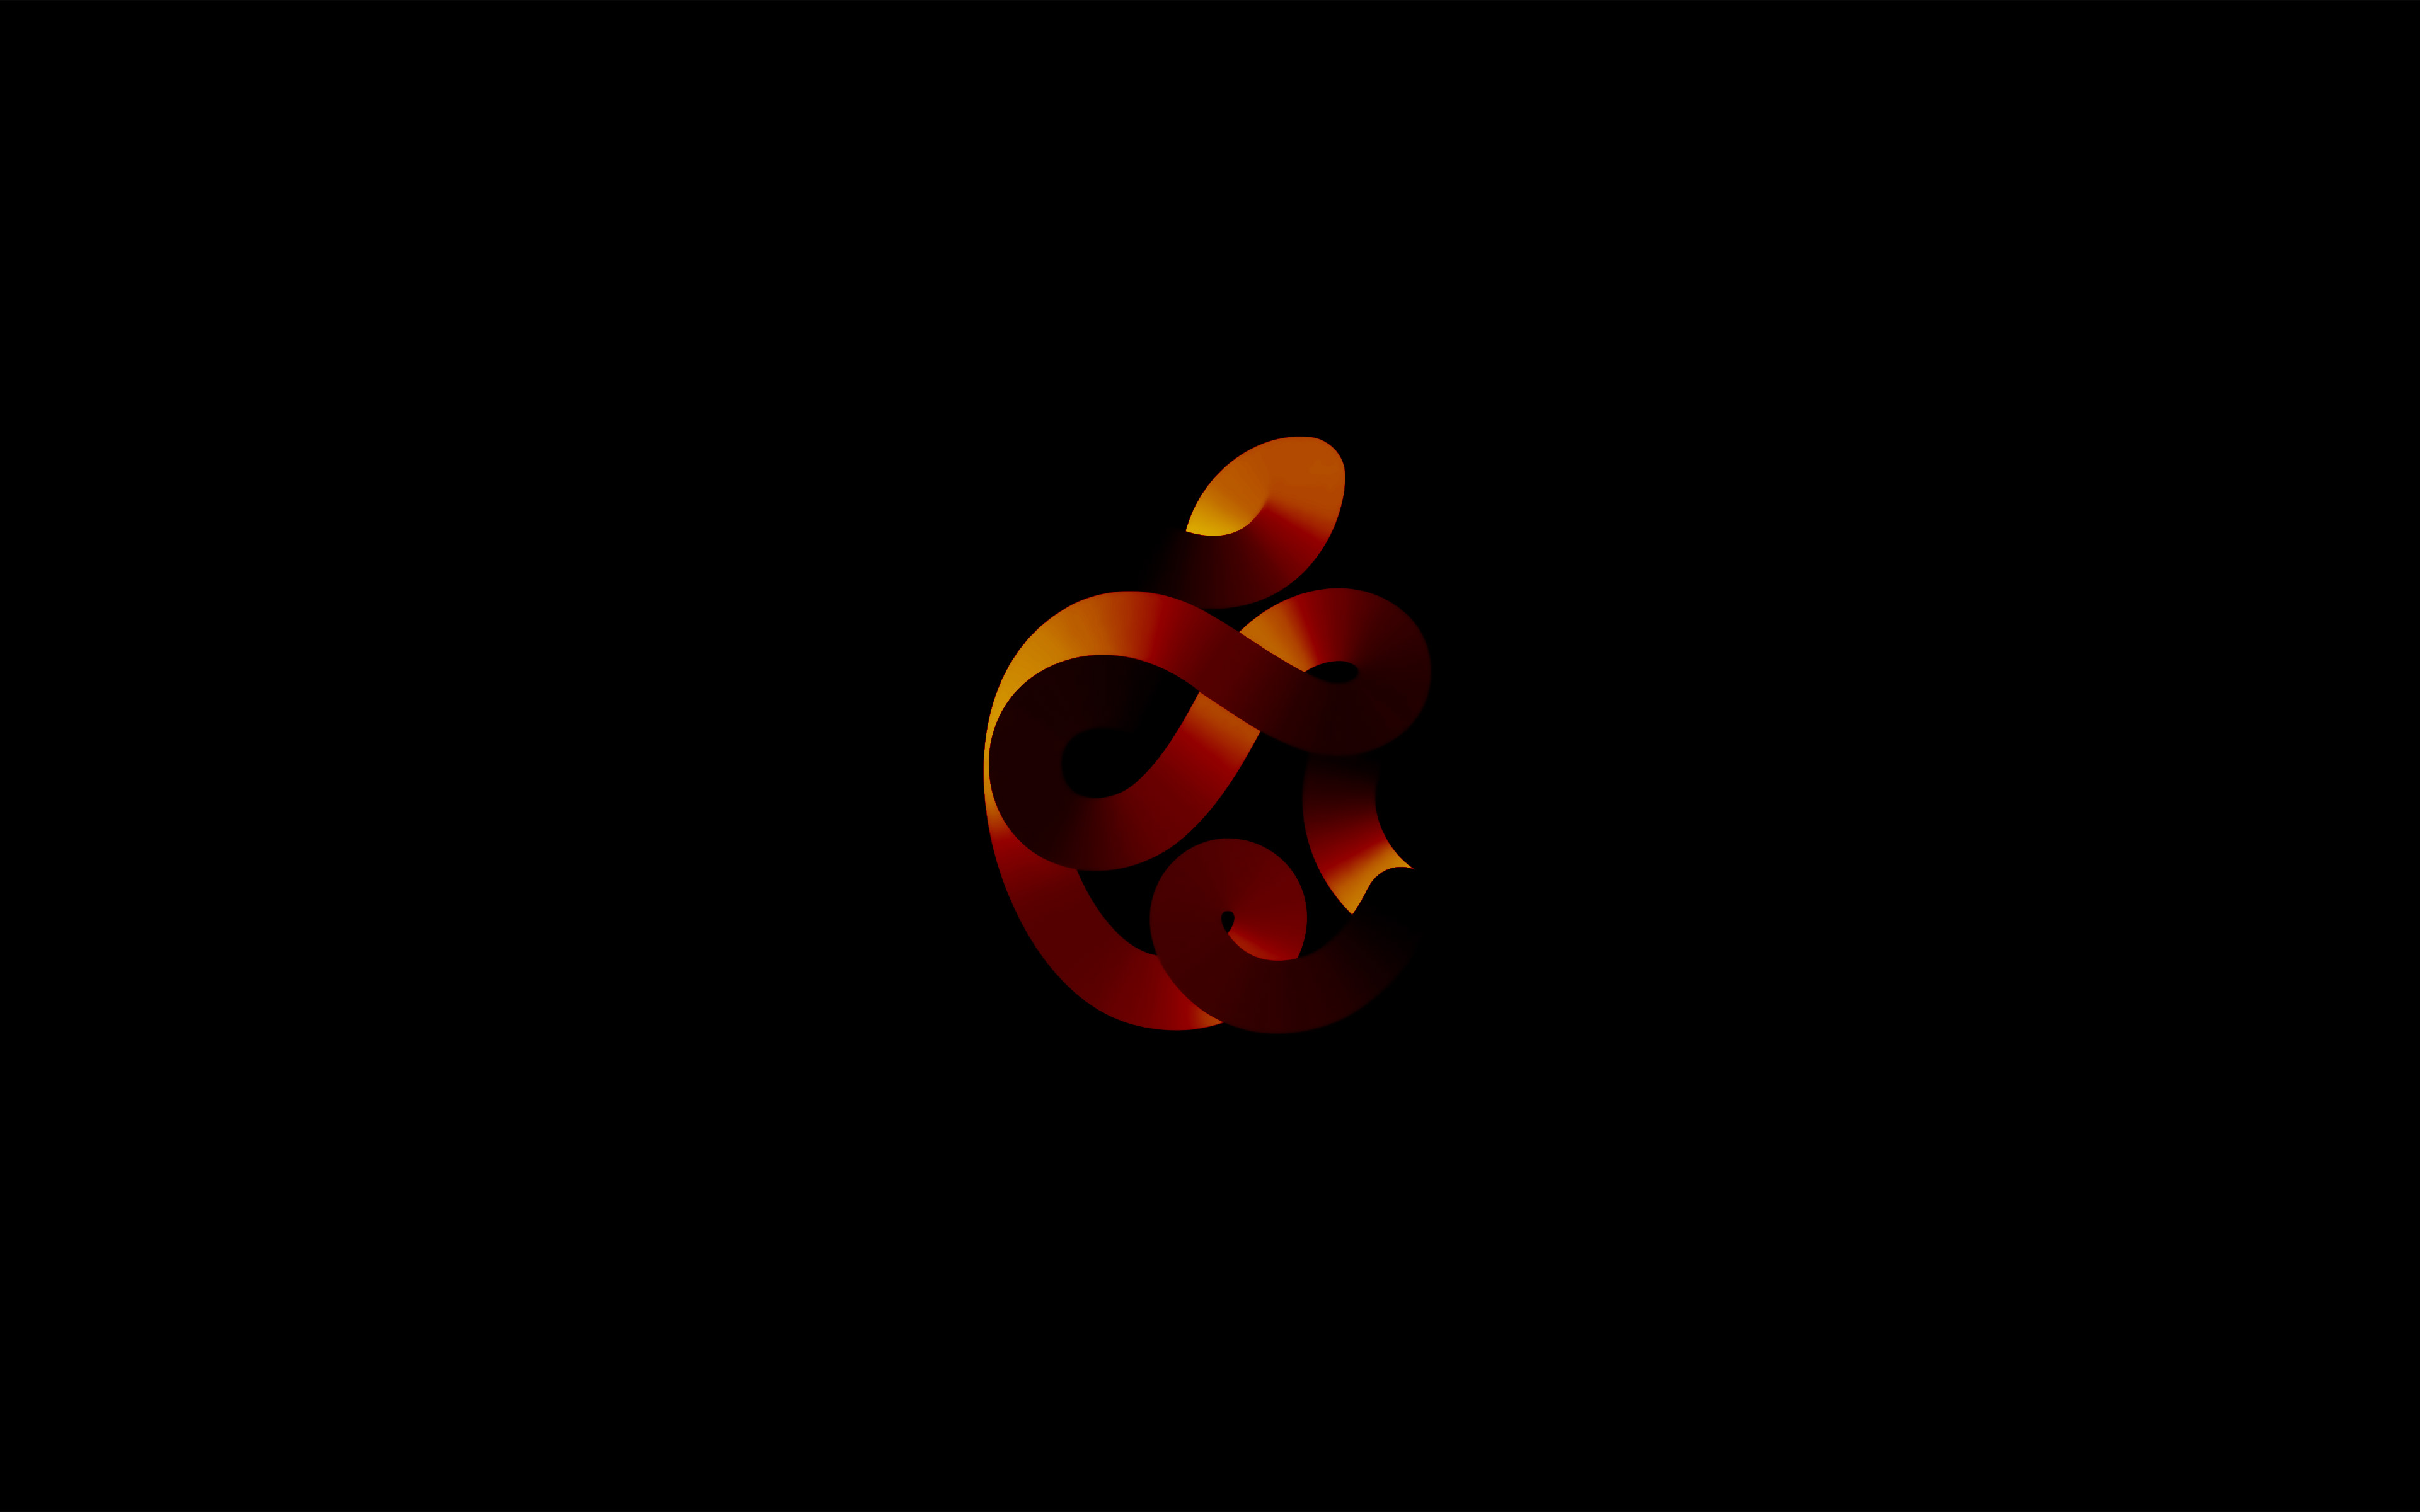 Download wallpaper Apple orange logo, 4k, minimalism, black background, Apple abstract logo, Apple 3D logo, creative, Apple for desktop with resolution 3840x2400. High Quality HD picture wallpaper